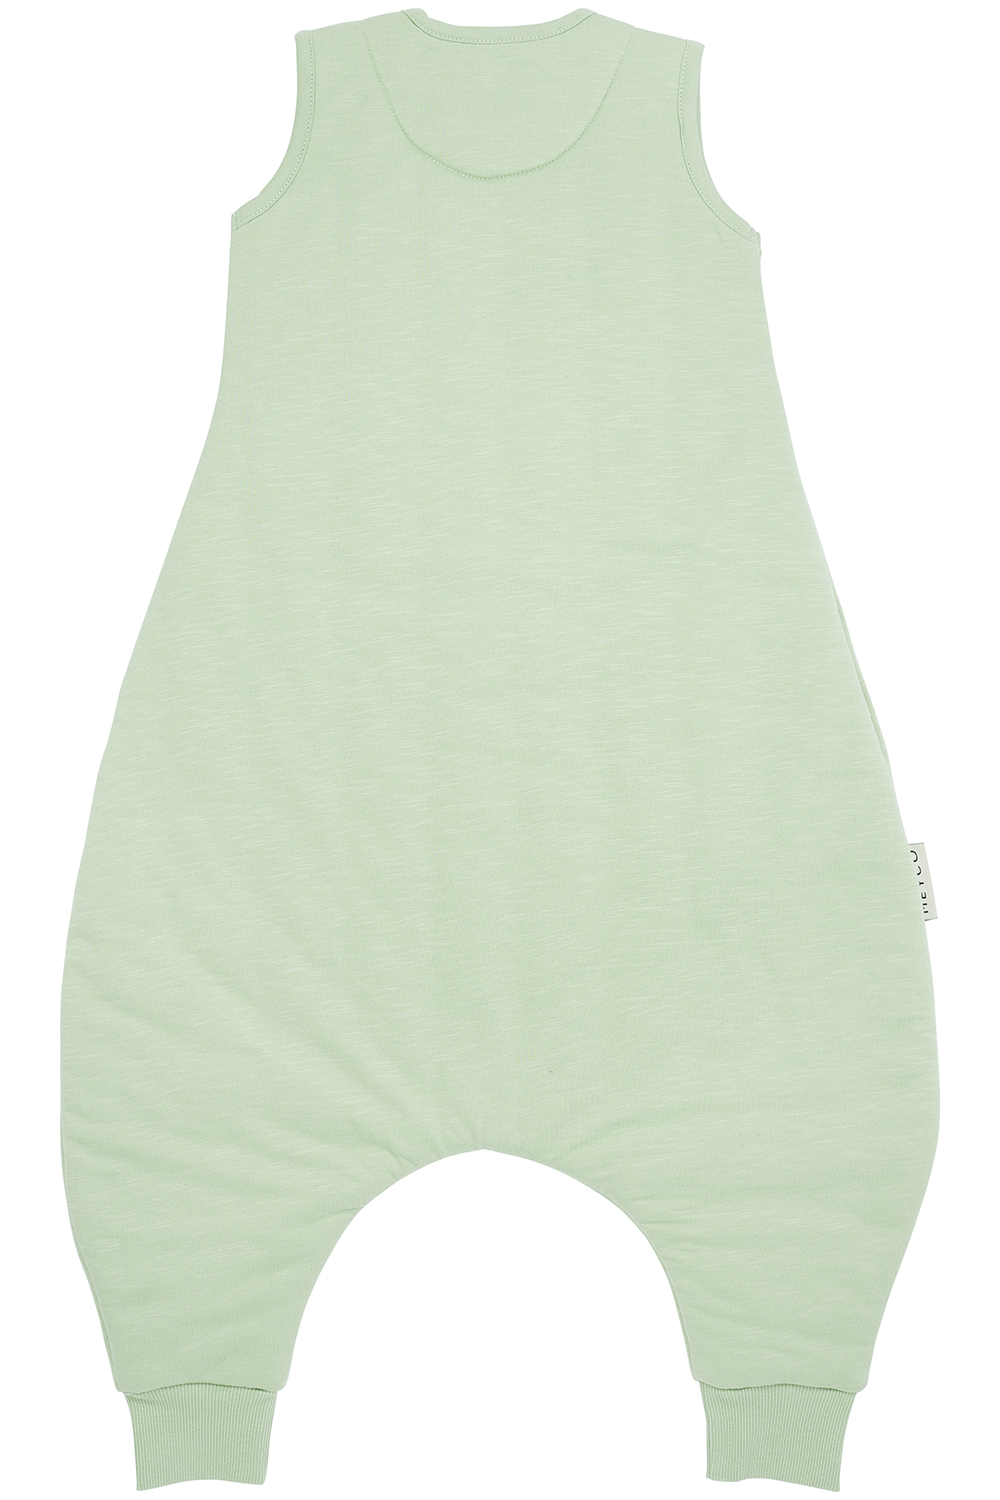 Baby winter slaapoverall jumper Slub - soft green - 104cm